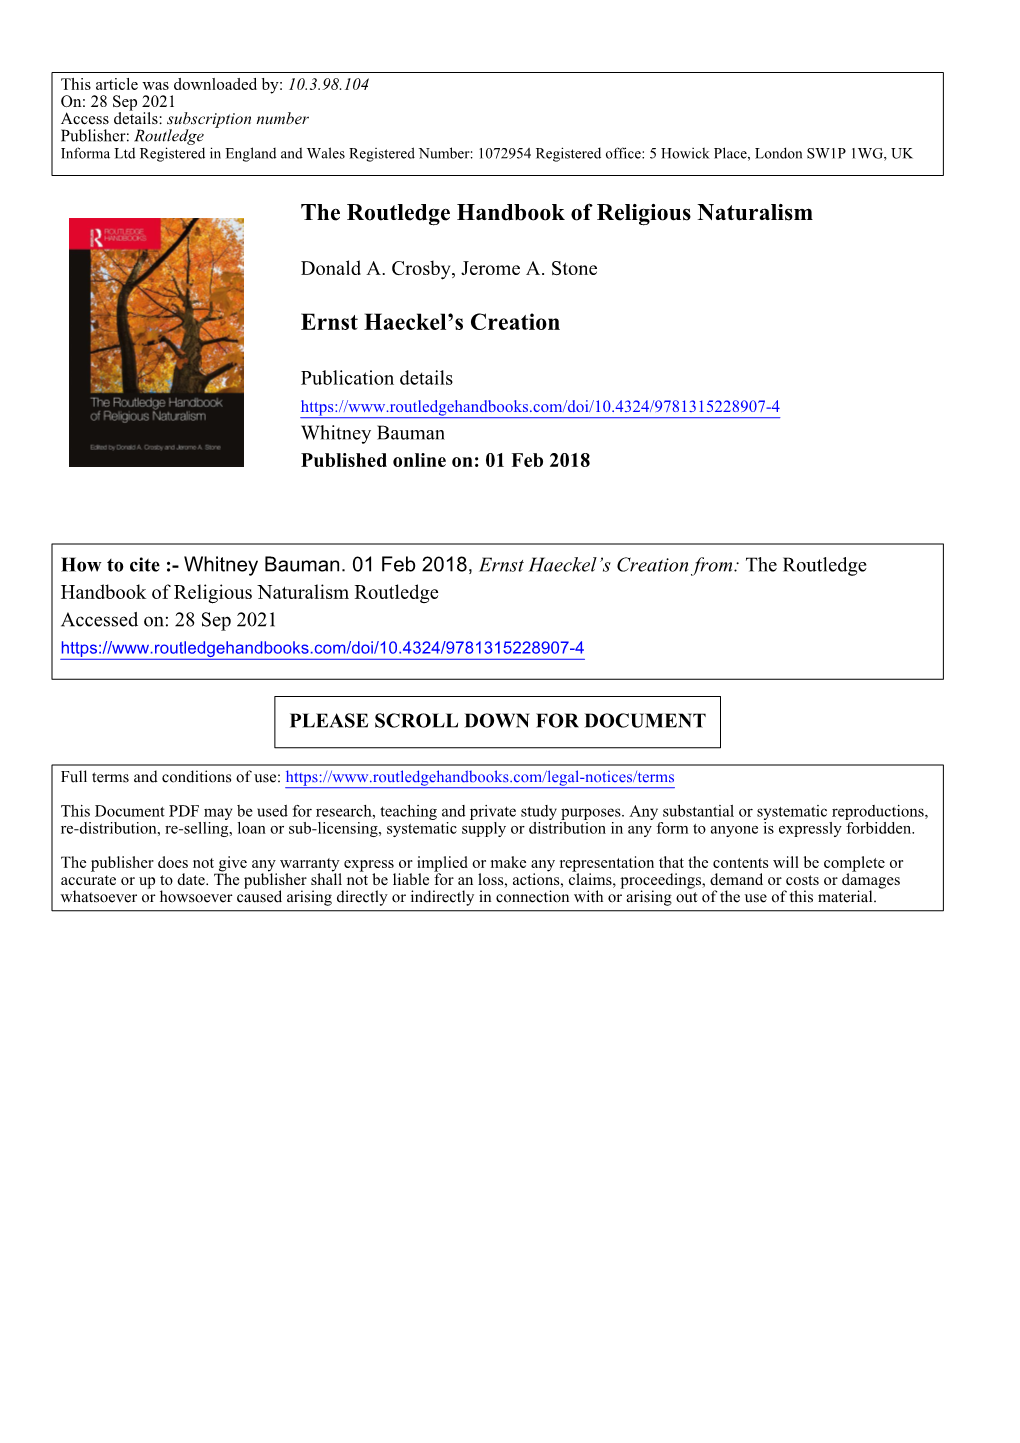 The Routledge Handbook of Religious Naturalism Ernst Haeckel's Creation